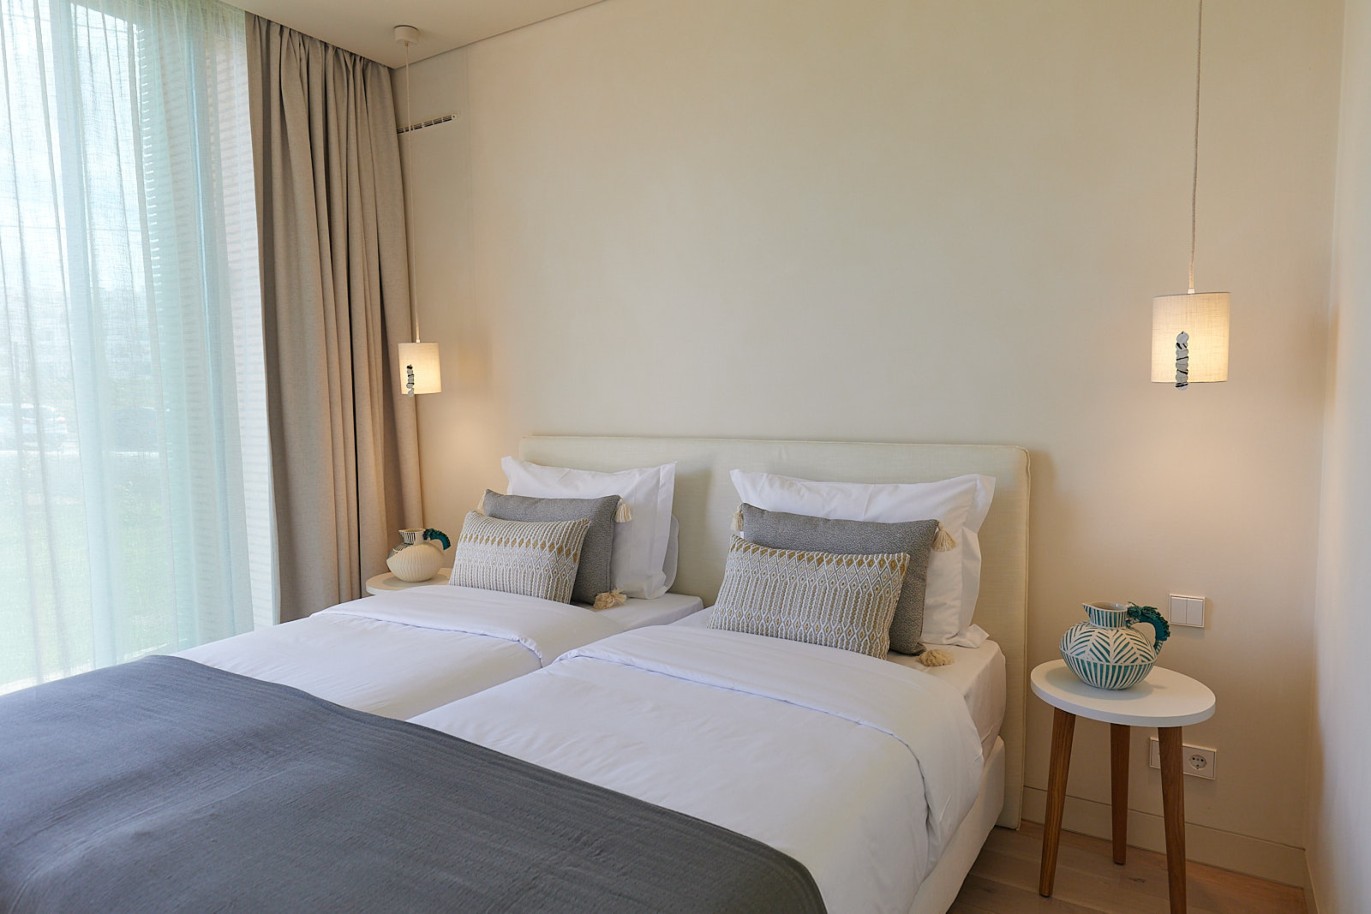 2 bedroom apartment in resort, for sale in Porches, Algarve_229248